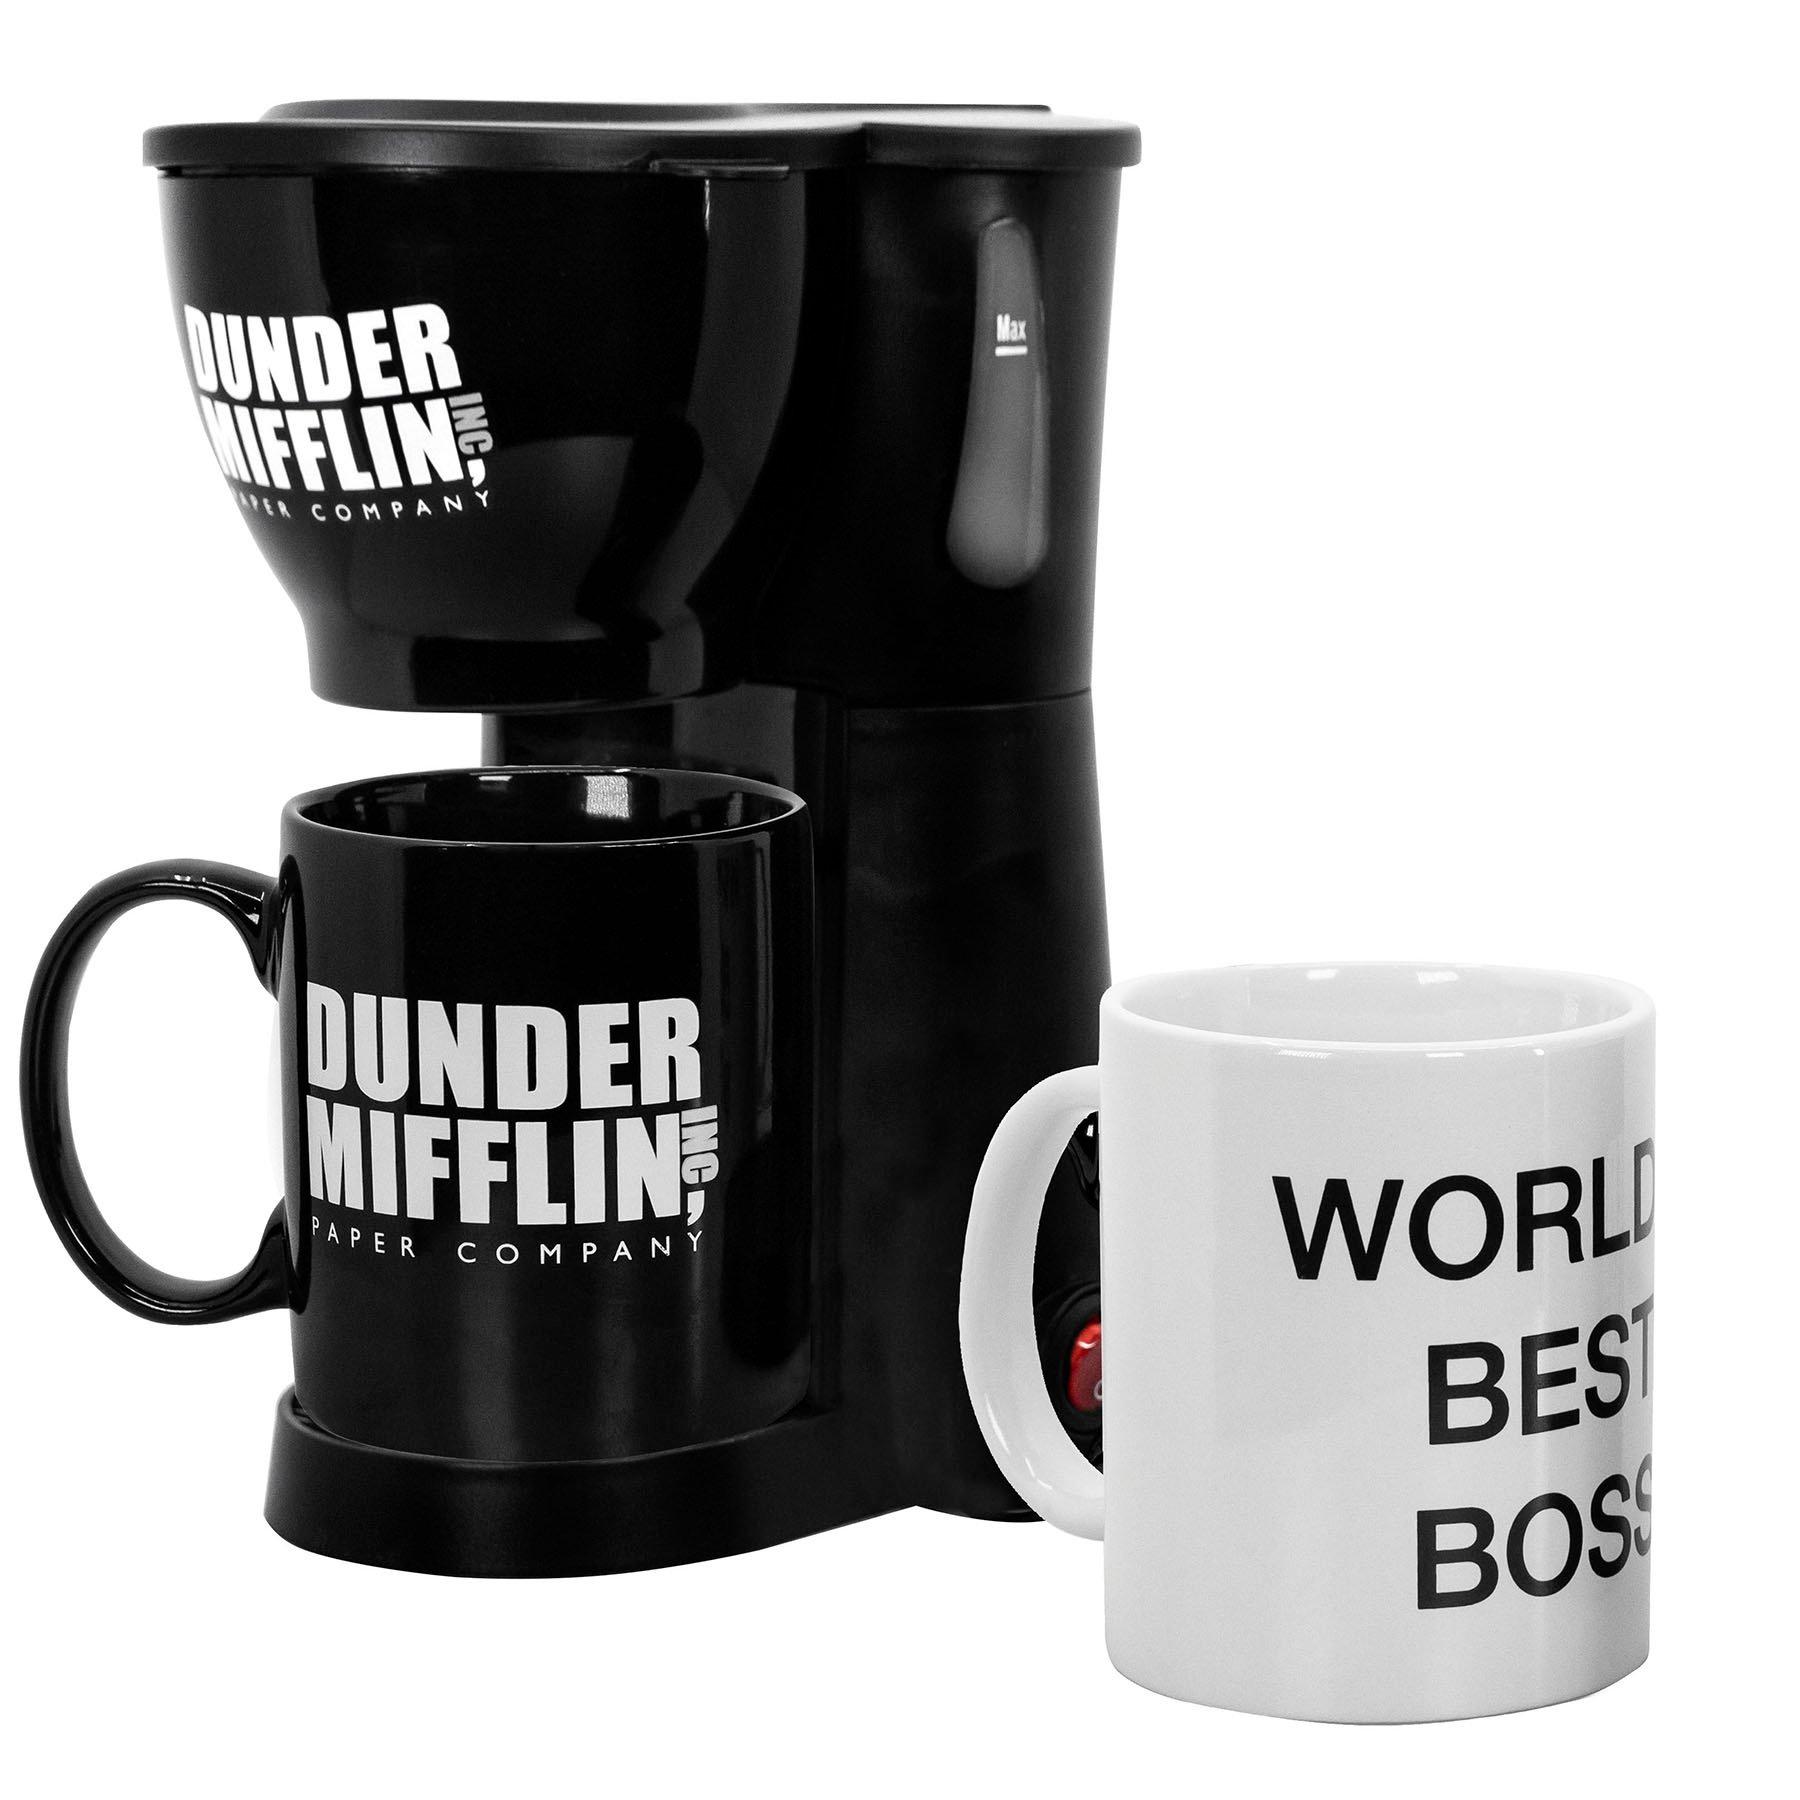 Coffee Cups Travel Coffee Mug with Stir Travel Easy Go Cup